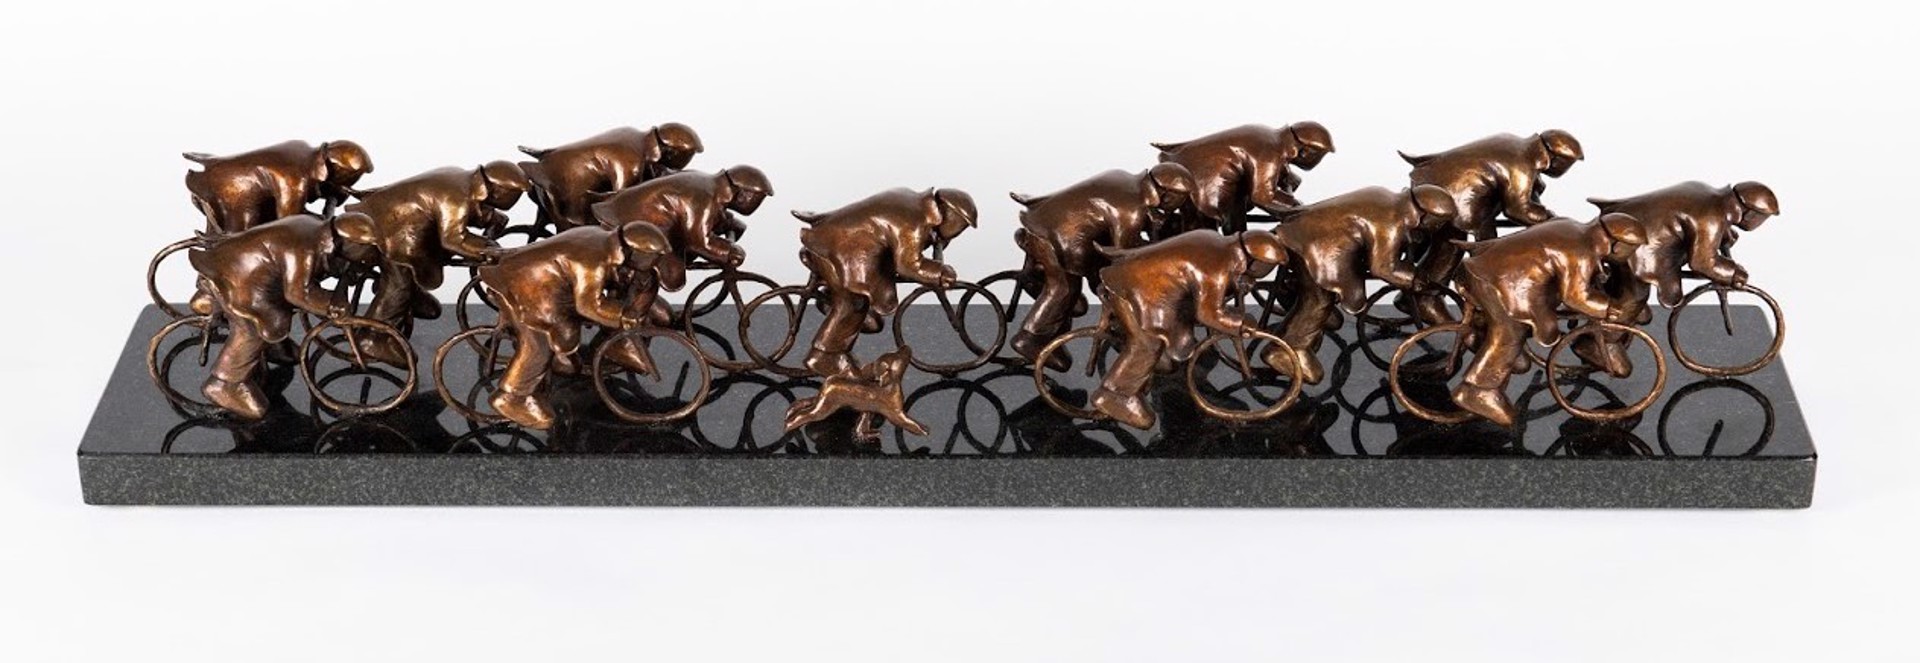 The Race by Mackenzie Thorpe - Sculpture